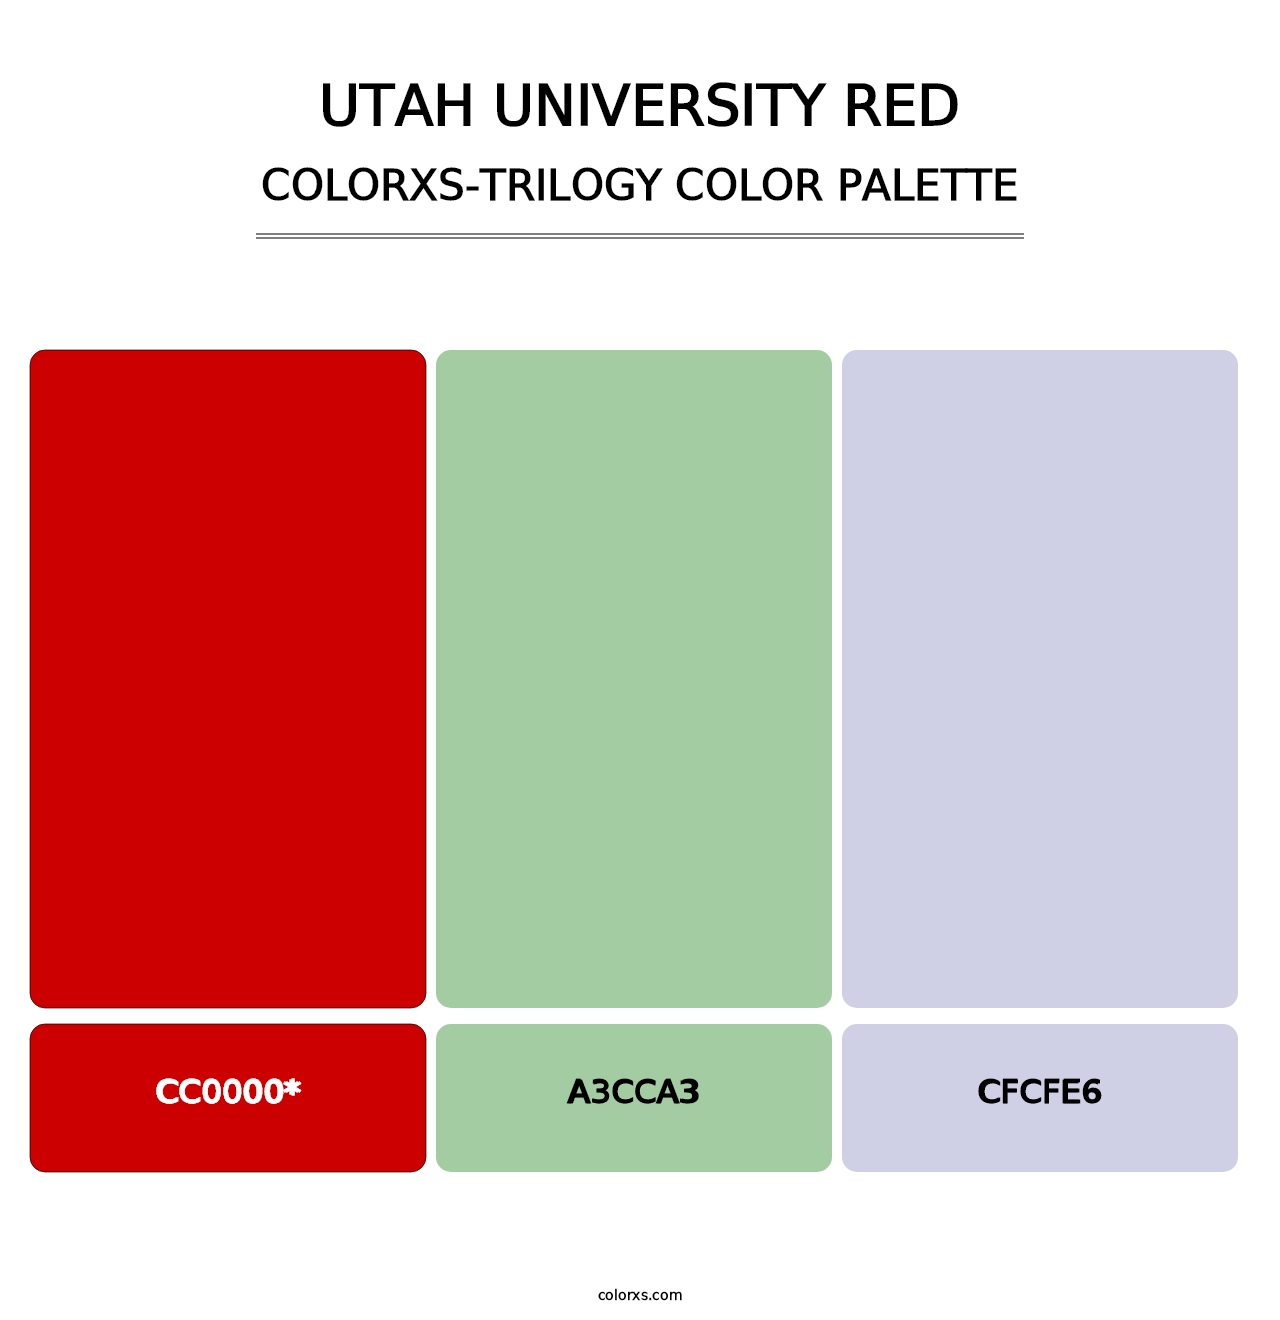 Utah University Red - Colorxs Trilogy Palette